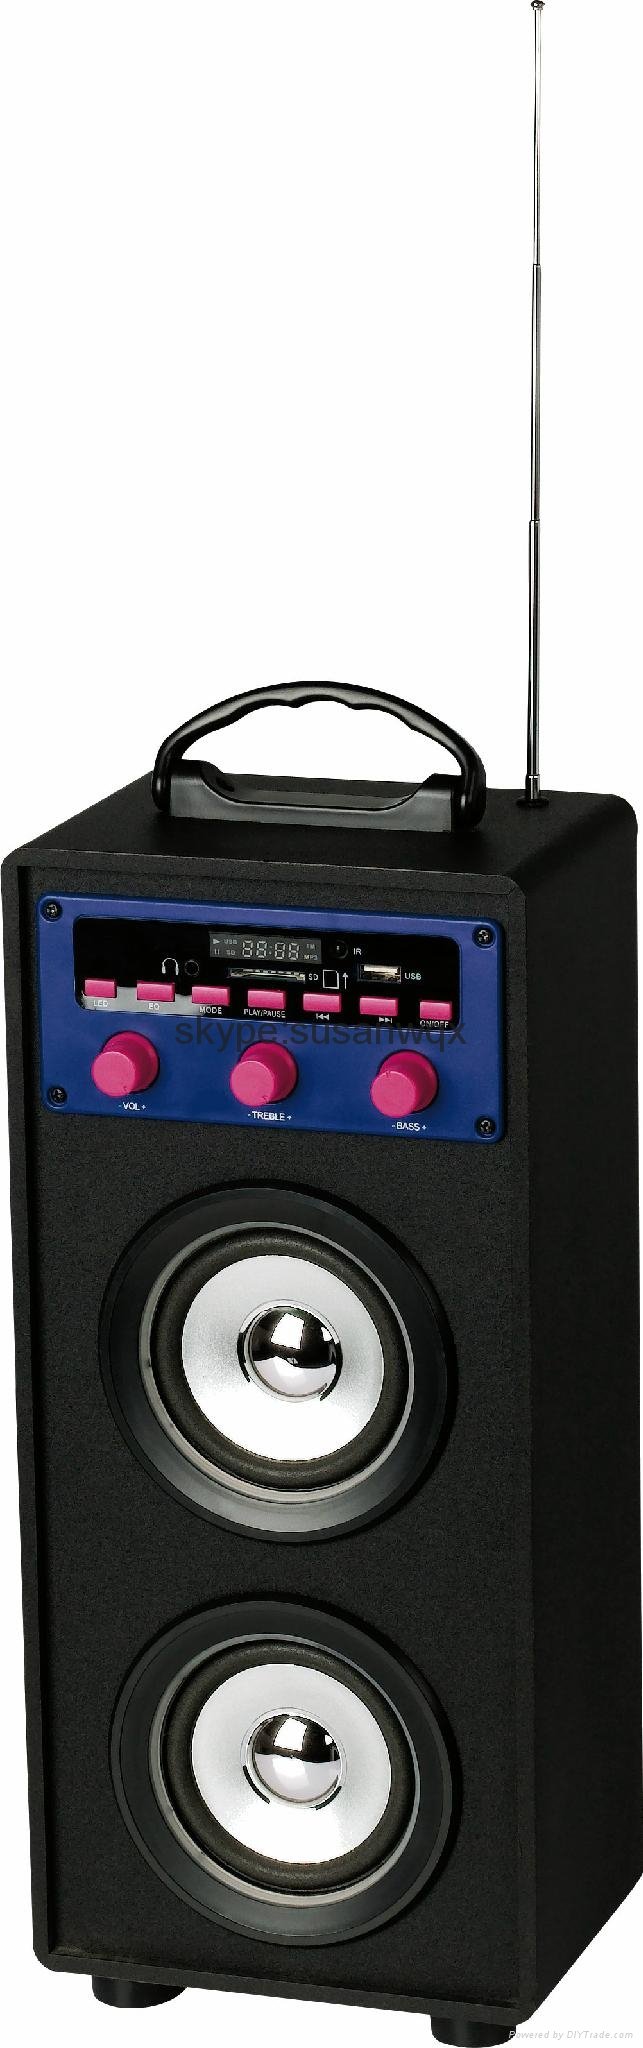 Portable bluetooth speaker factory 2